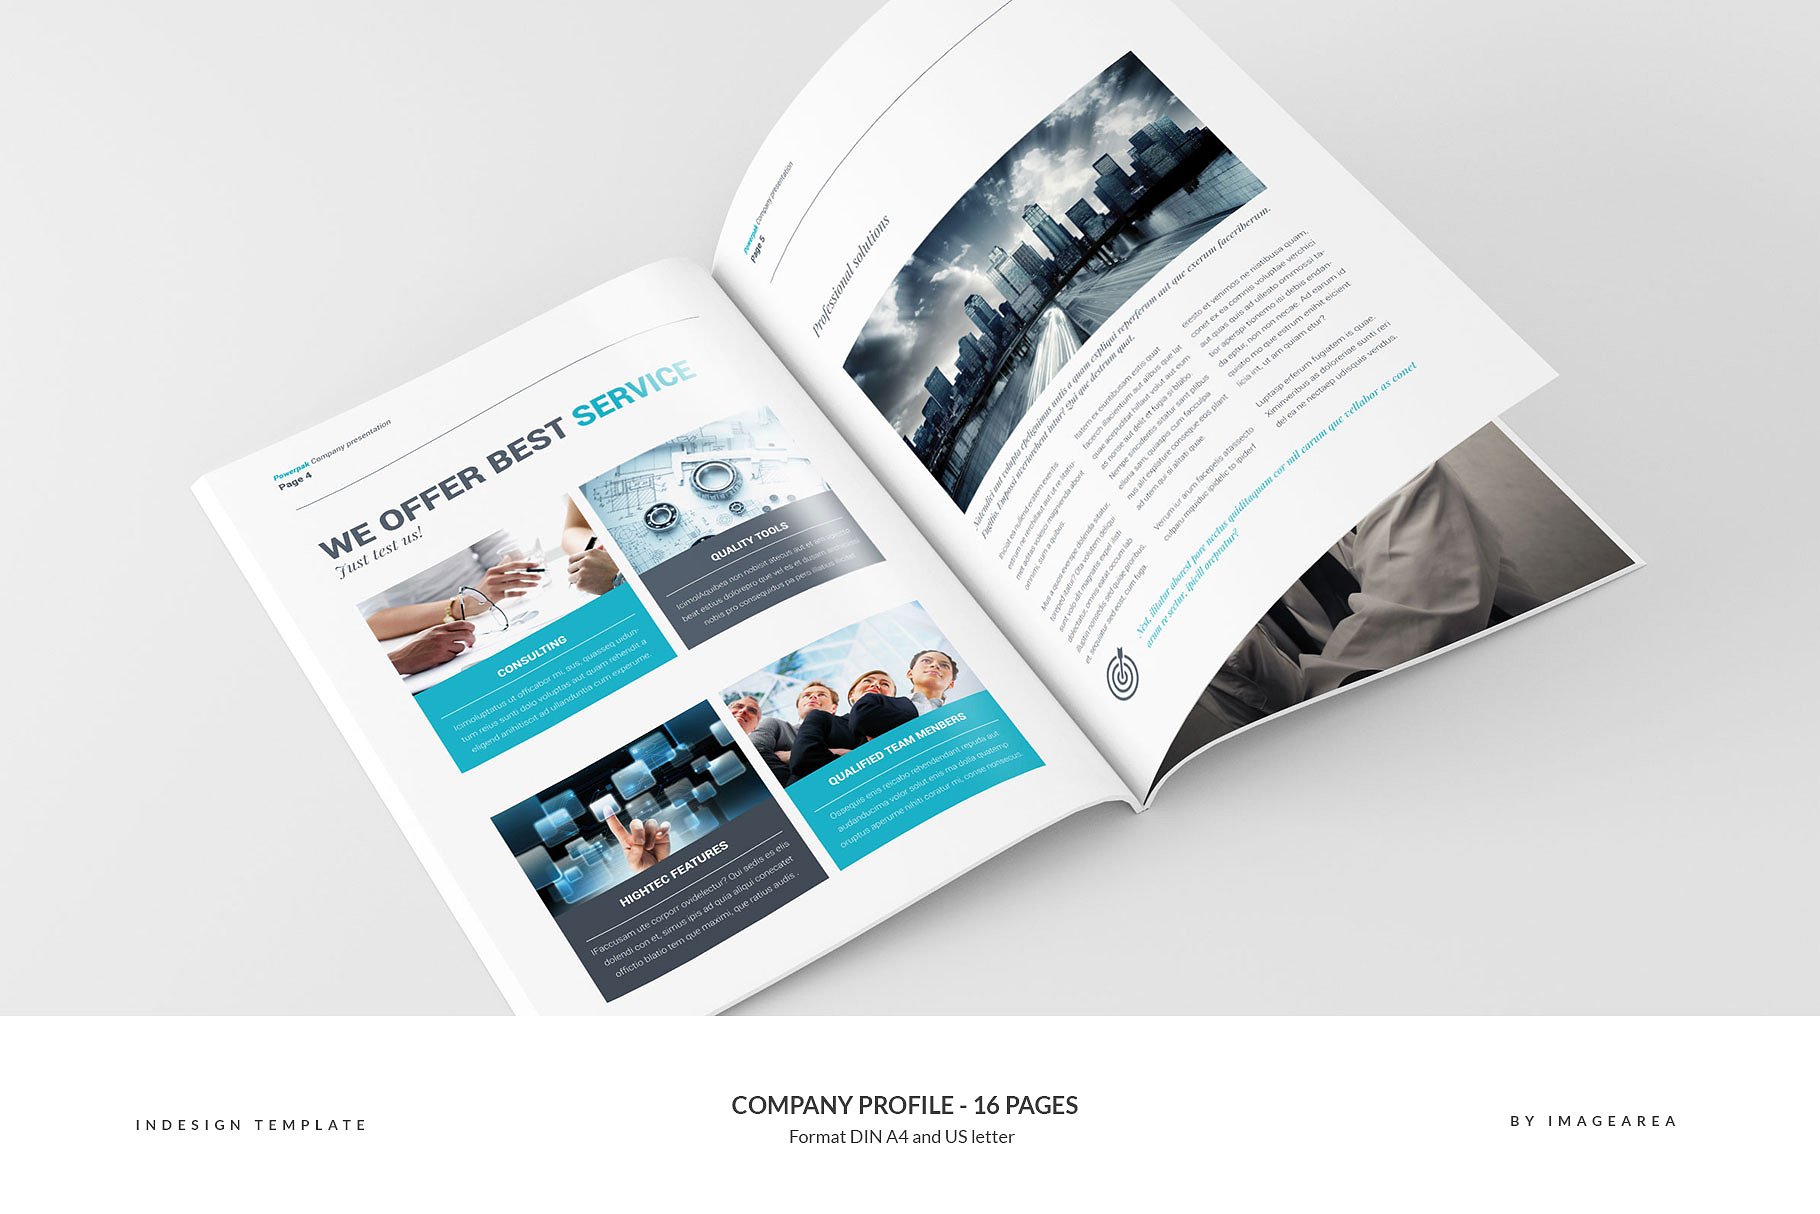 企业宣传画册设计模板 Company Profile – 16 Pages插图(3)